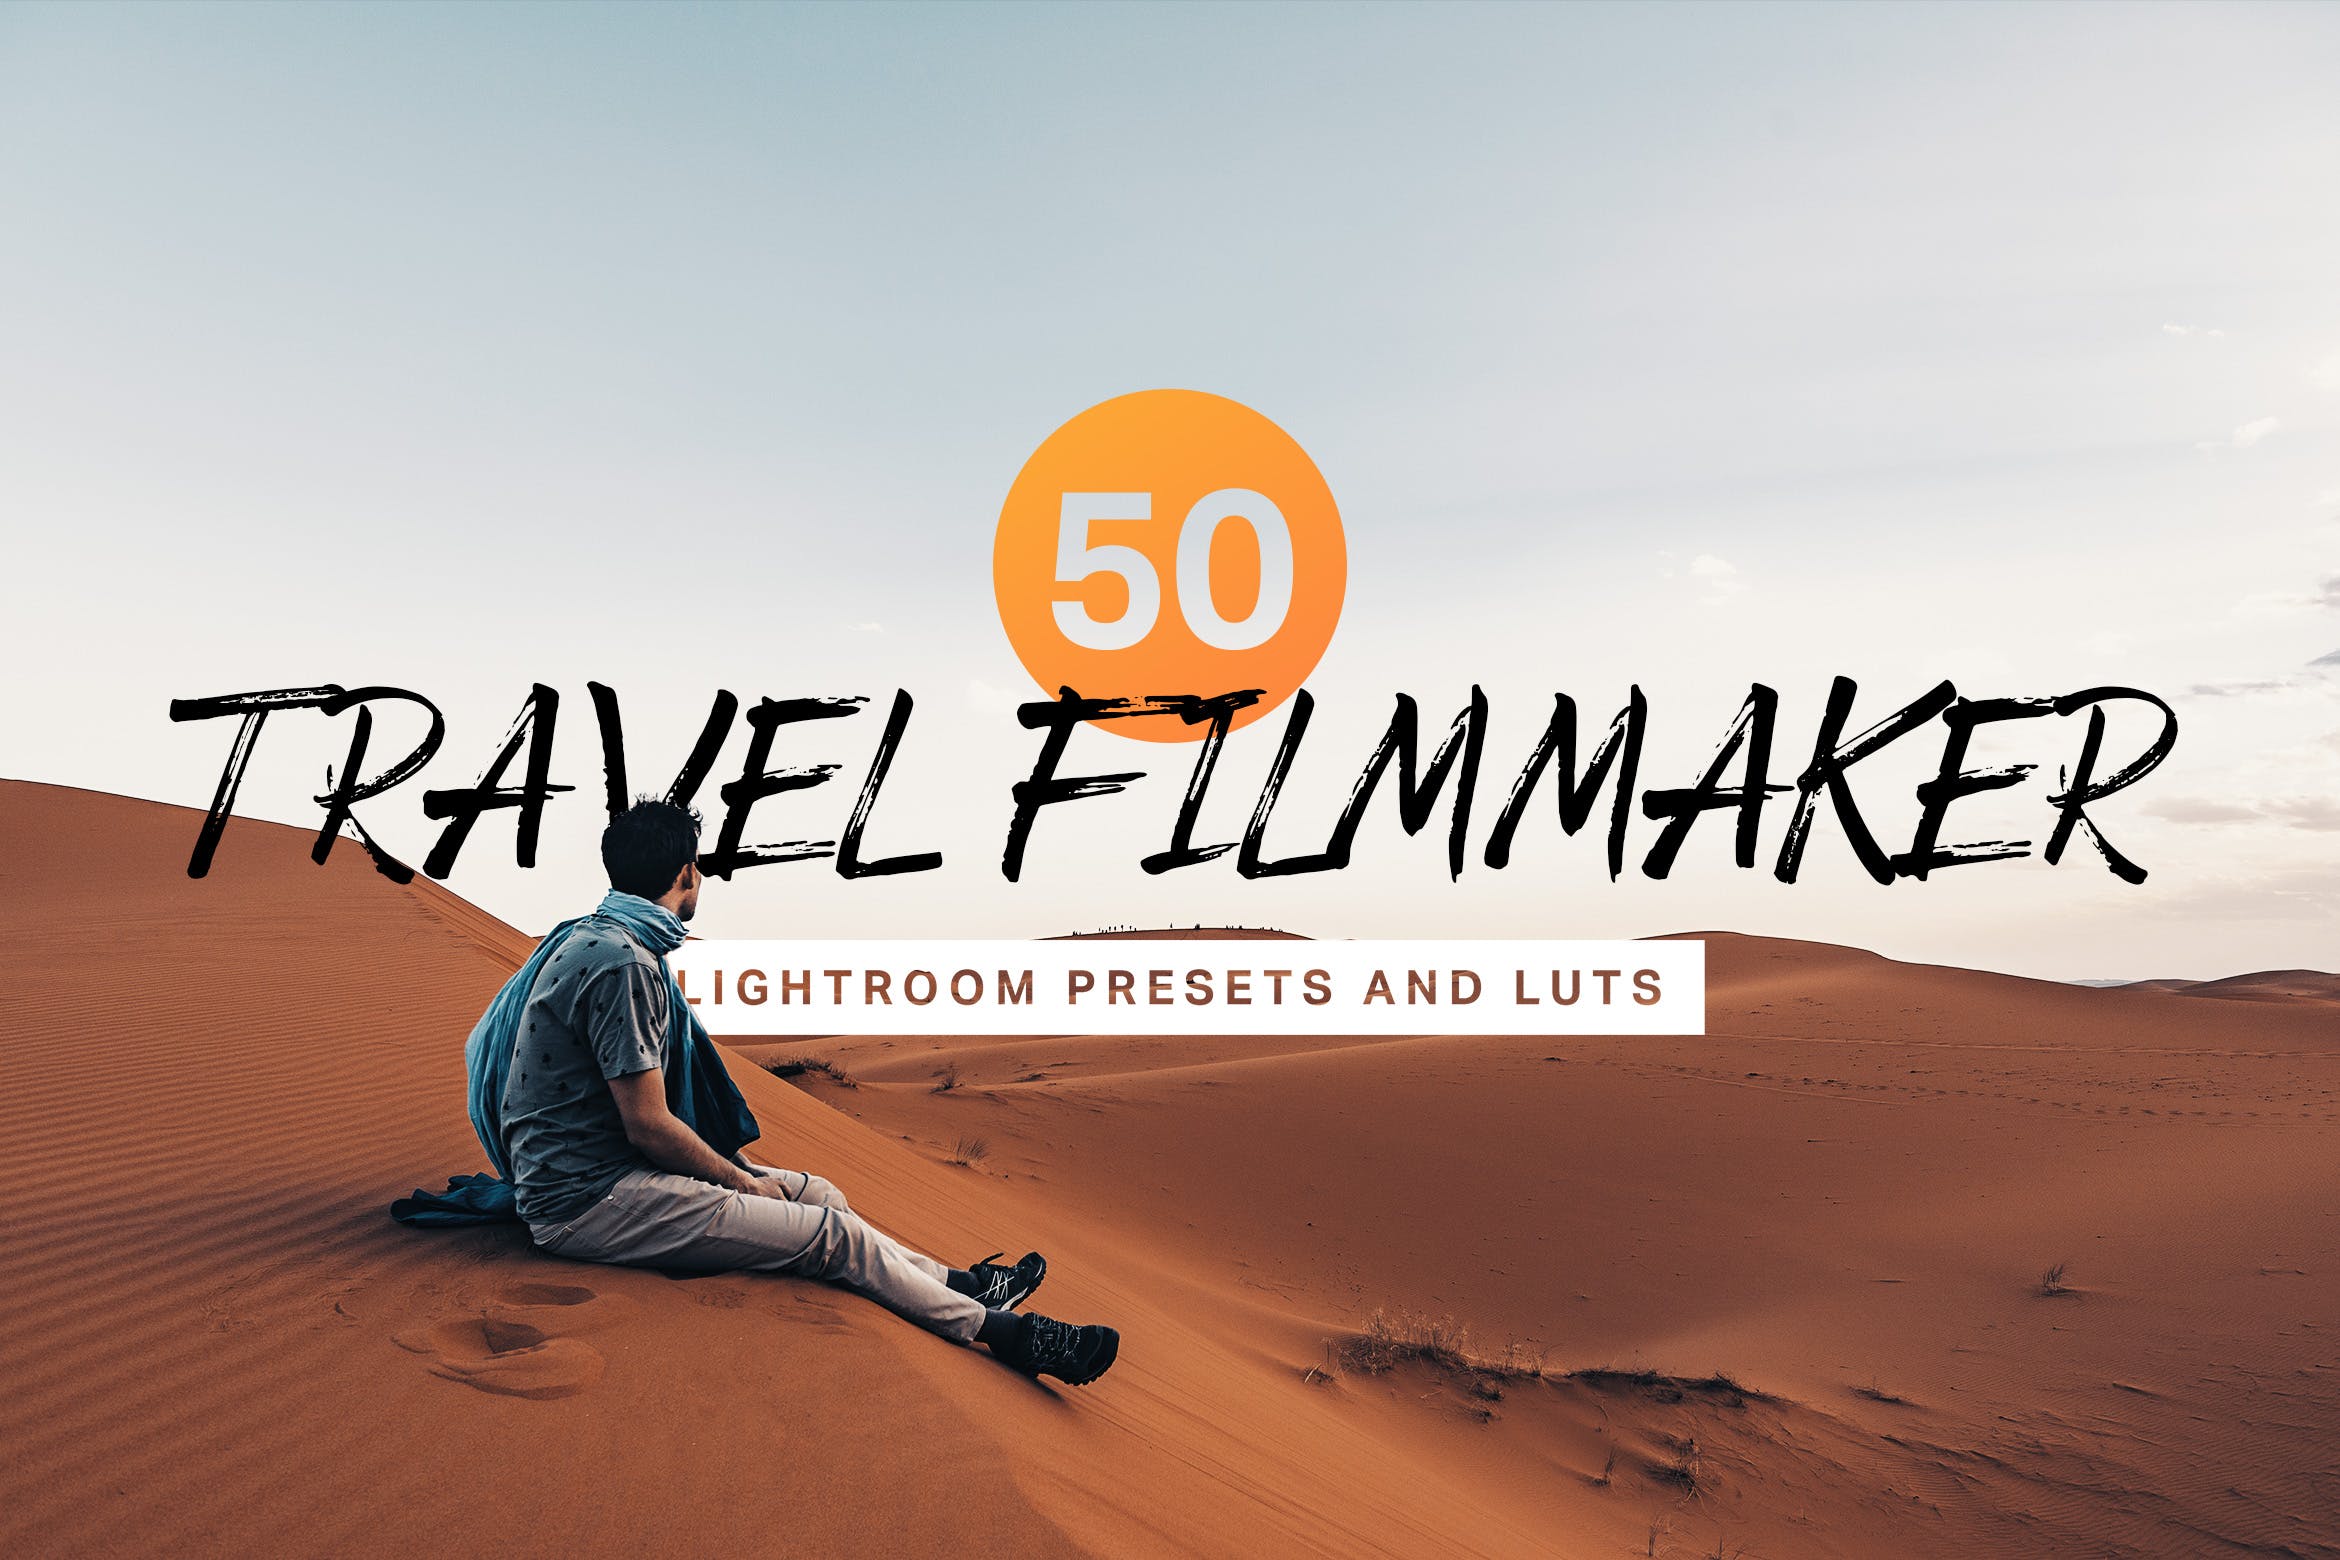 50款旅行照片电影色调滤镜素材库精选LR预设 50 Travel Filmmaker Lightroom Presets and LUTs插图